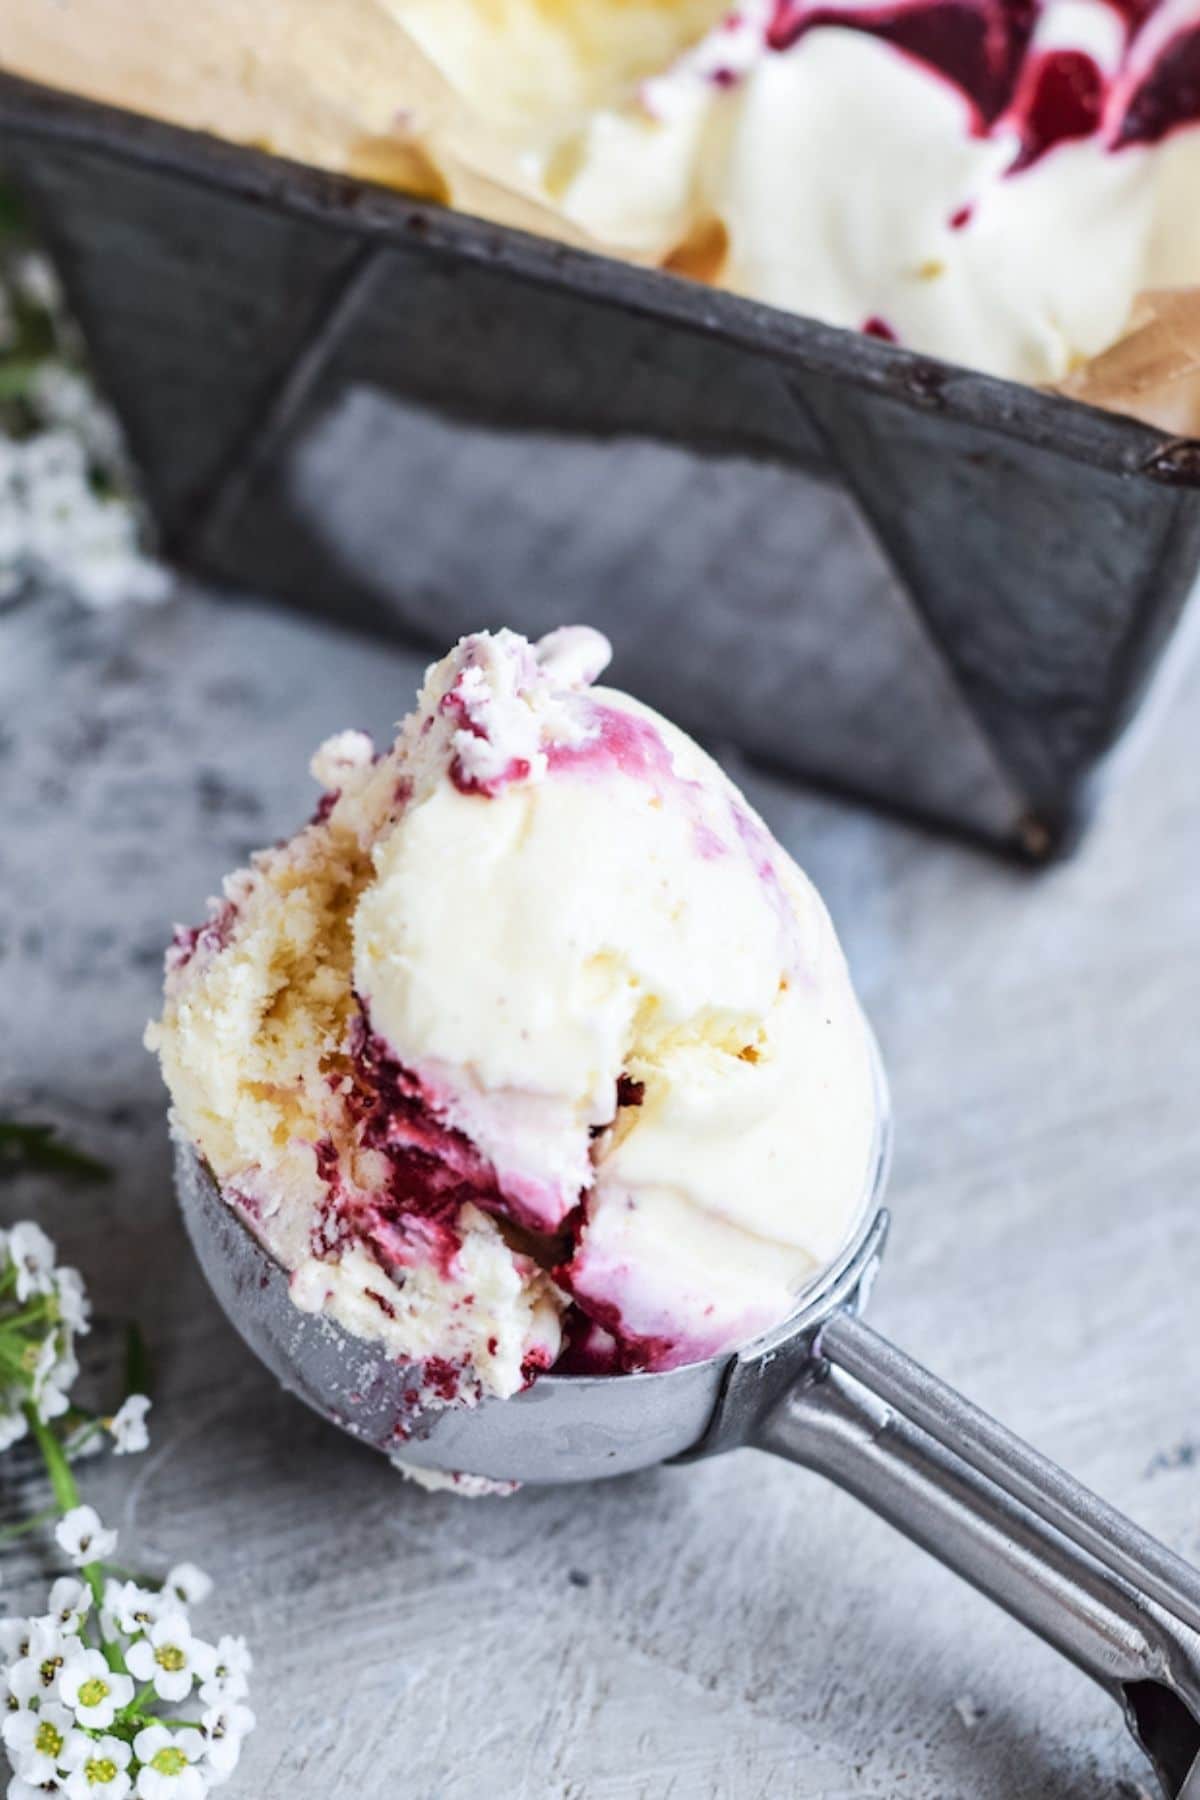 a scoop of ice cream with purple swirls.